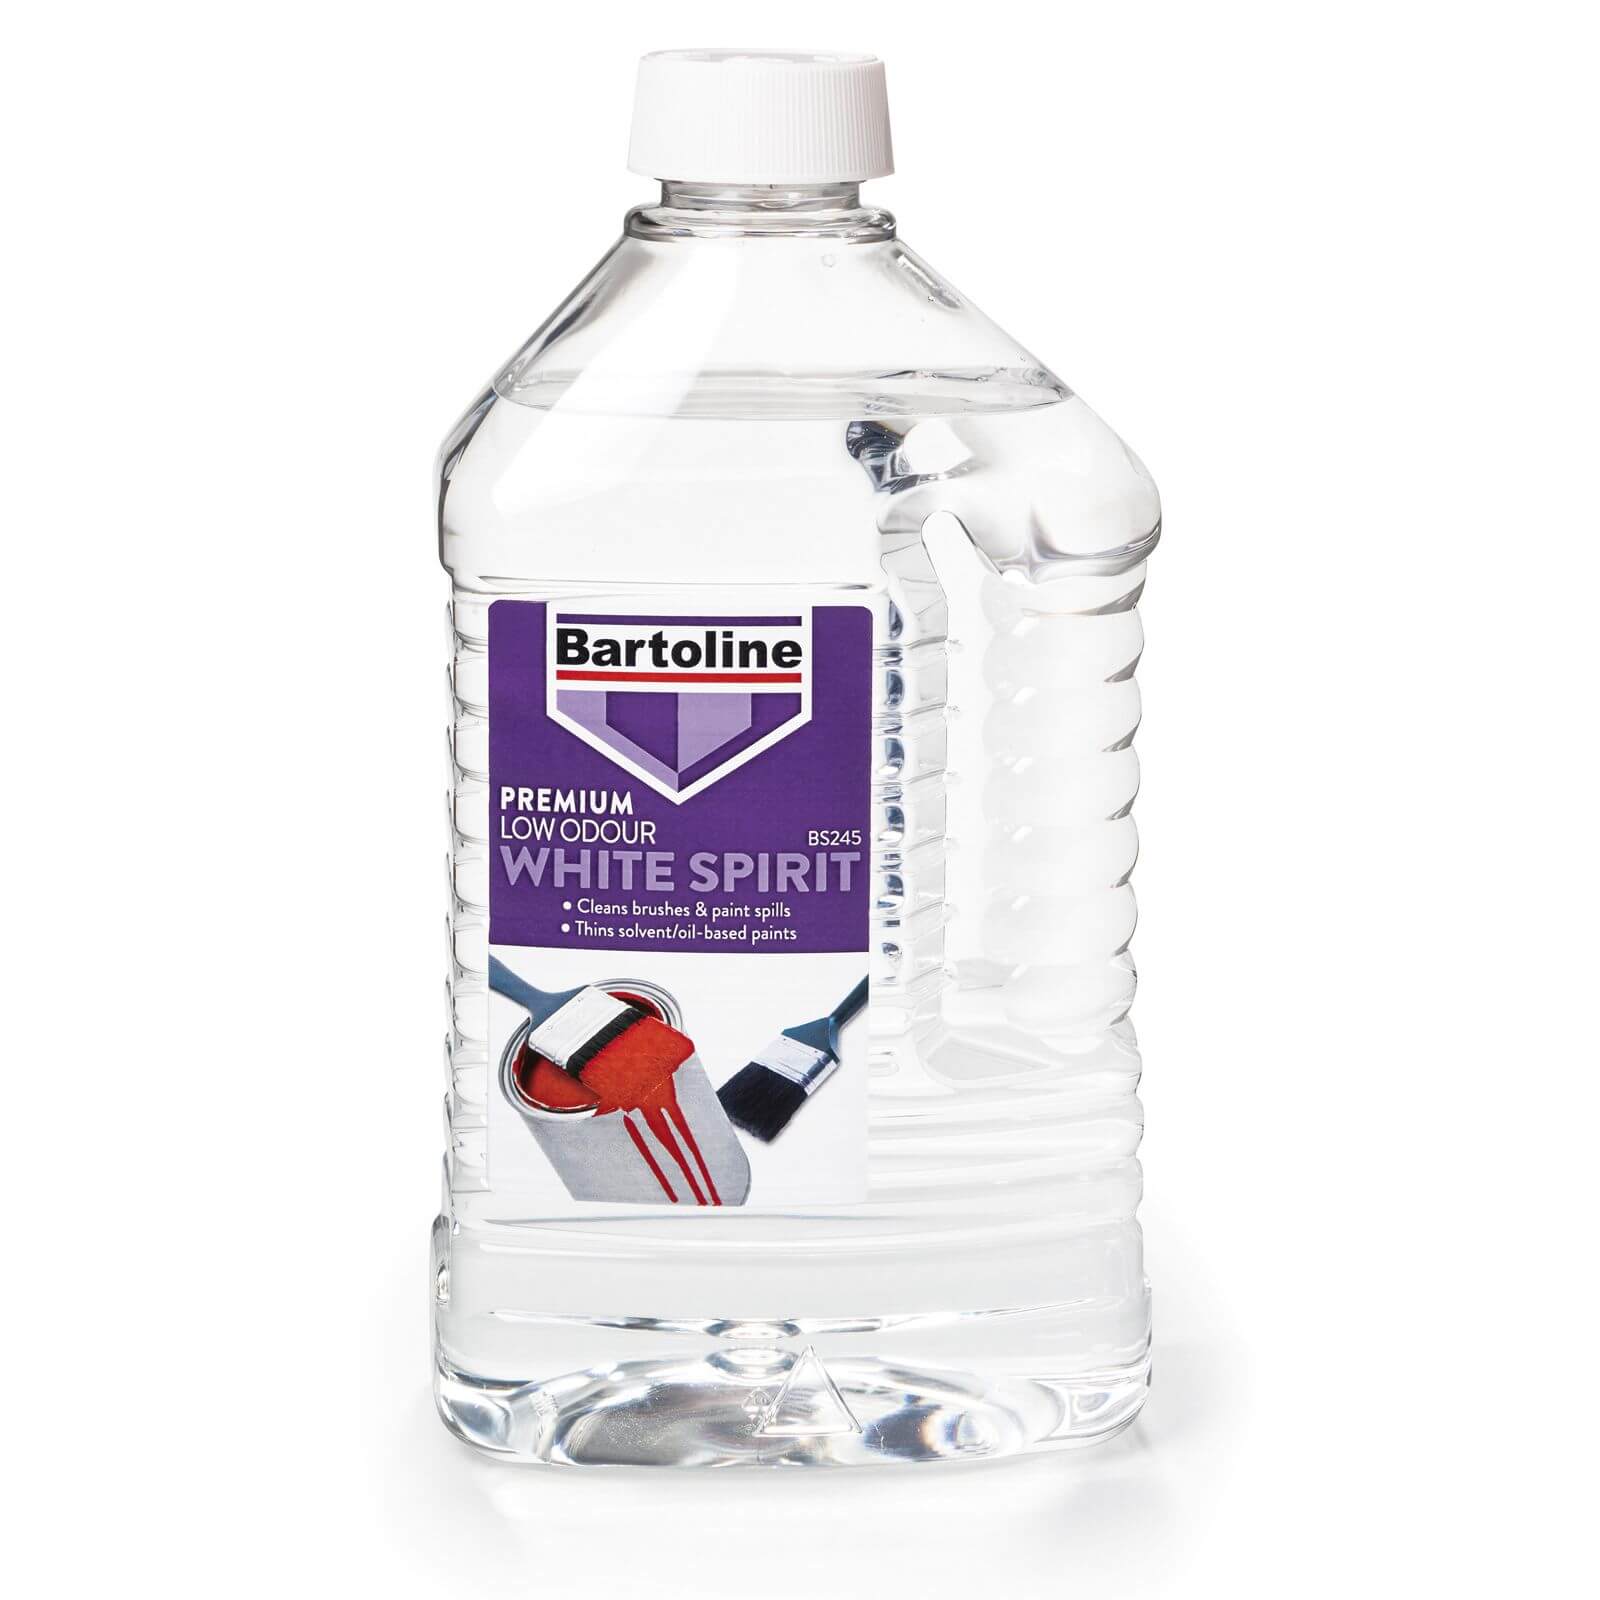 Bartoline Premium Low Odour White Spirit - 2L